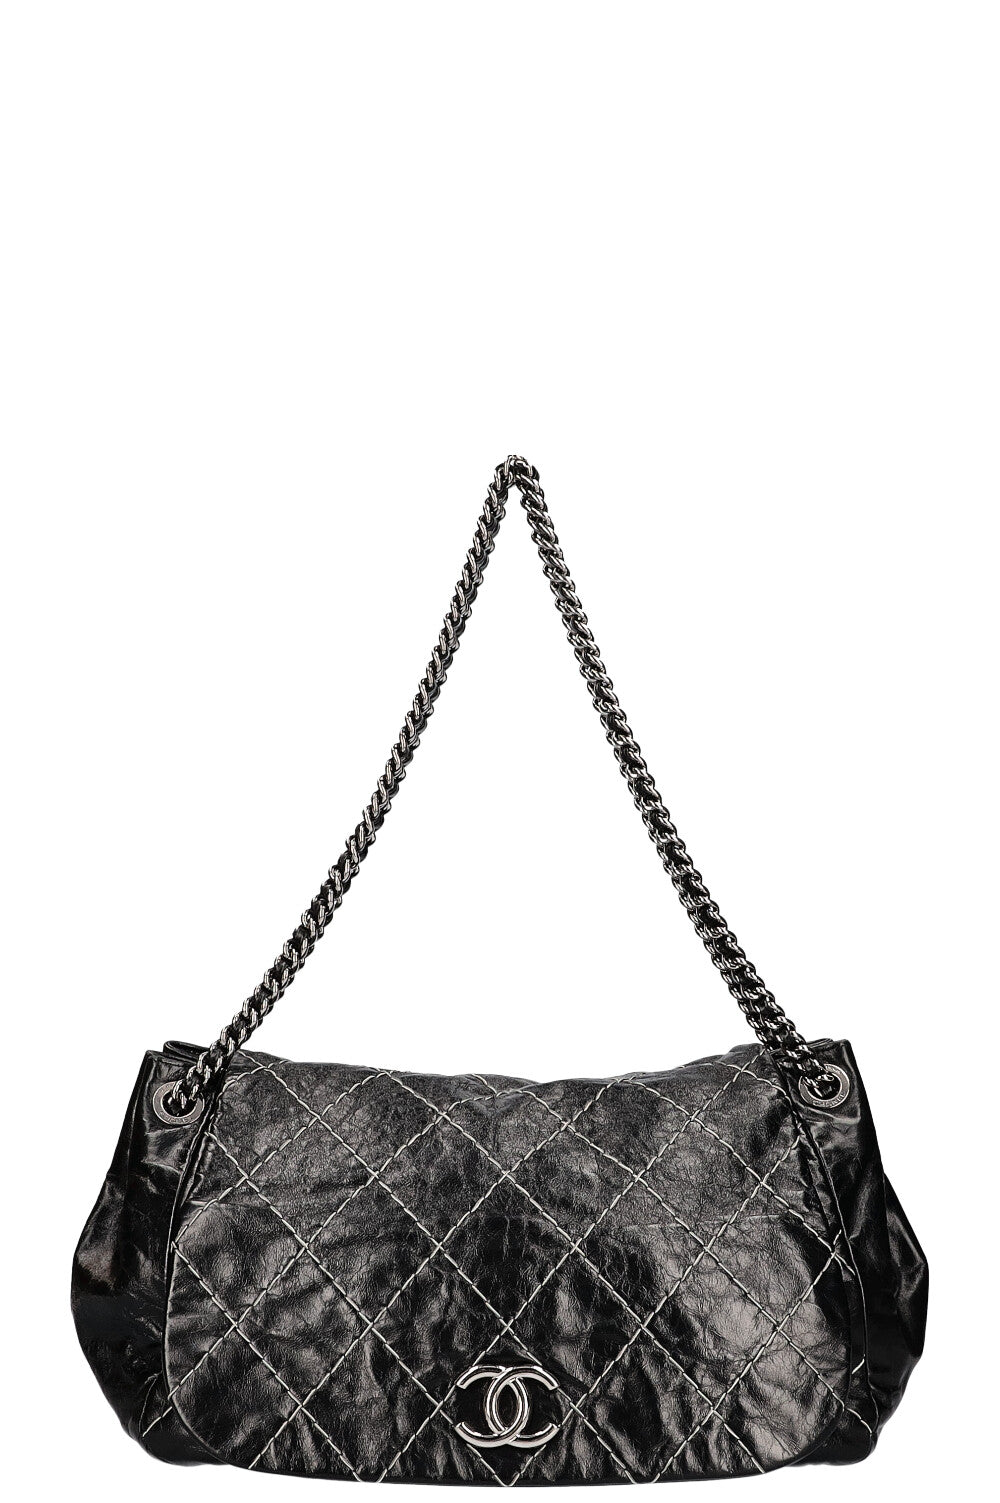 Chanel Bag Black 2009-2010 